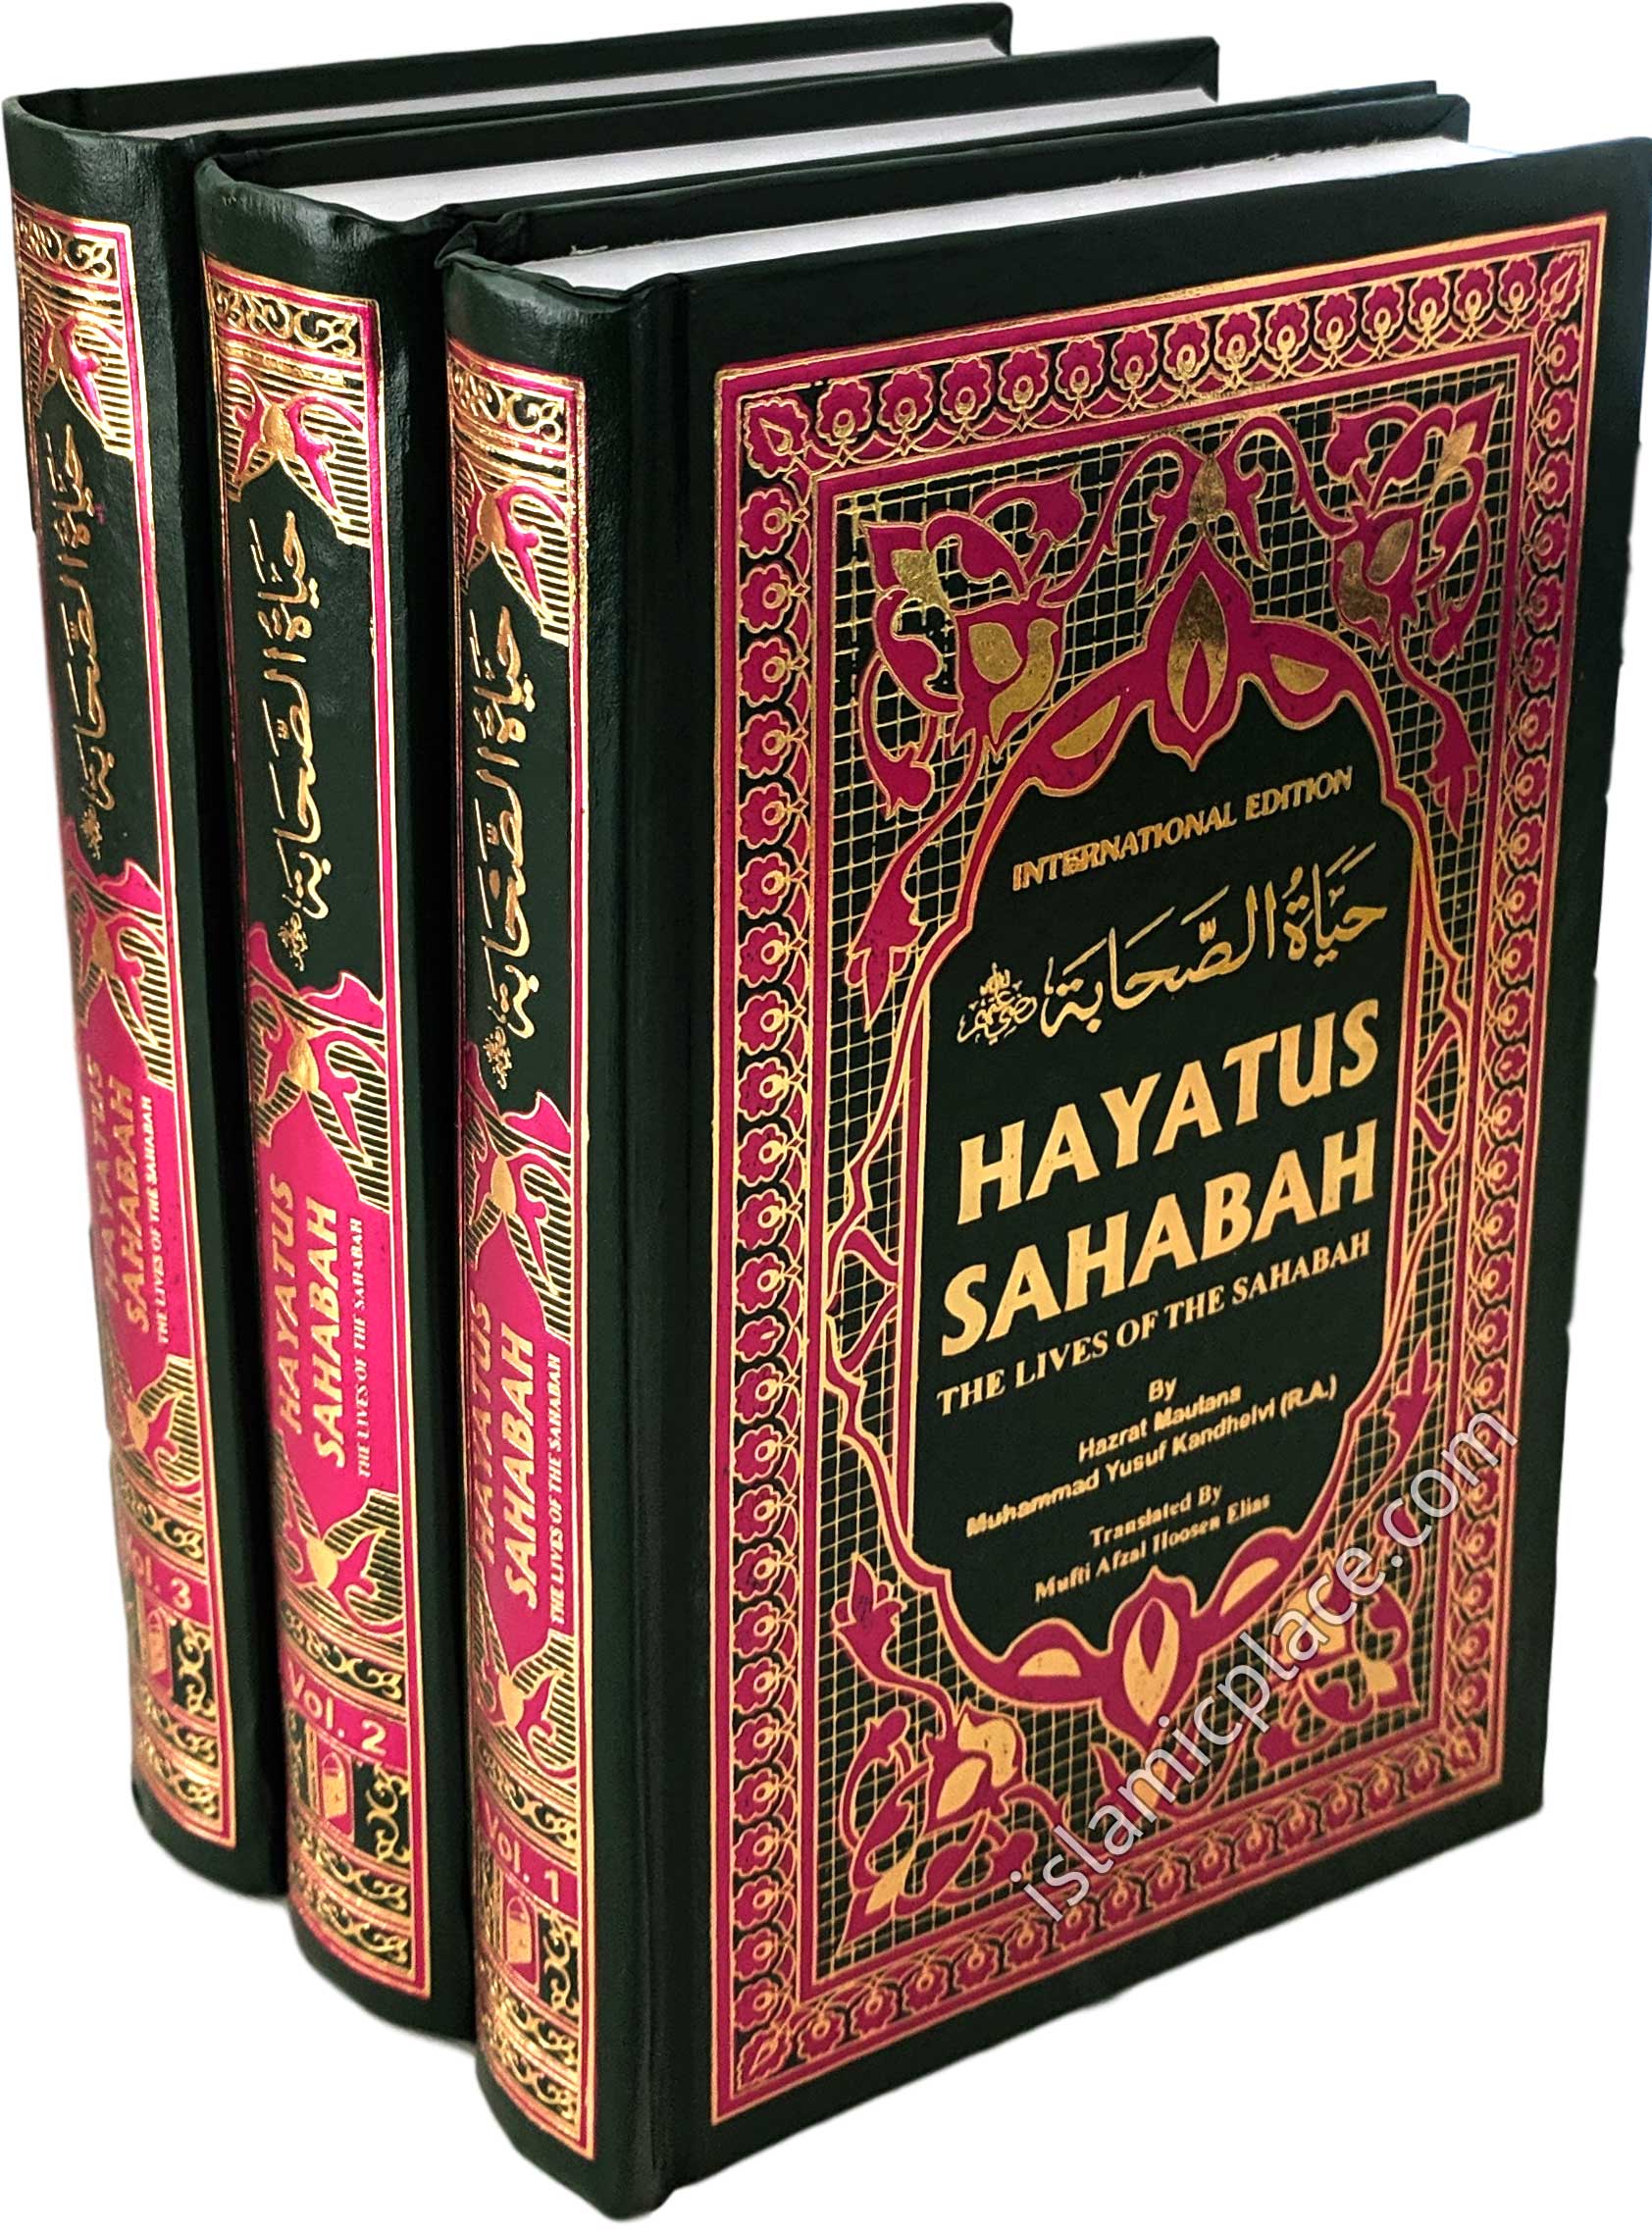 [3 vol set] Hayatus Sahabah: The Lives of the Sahabah